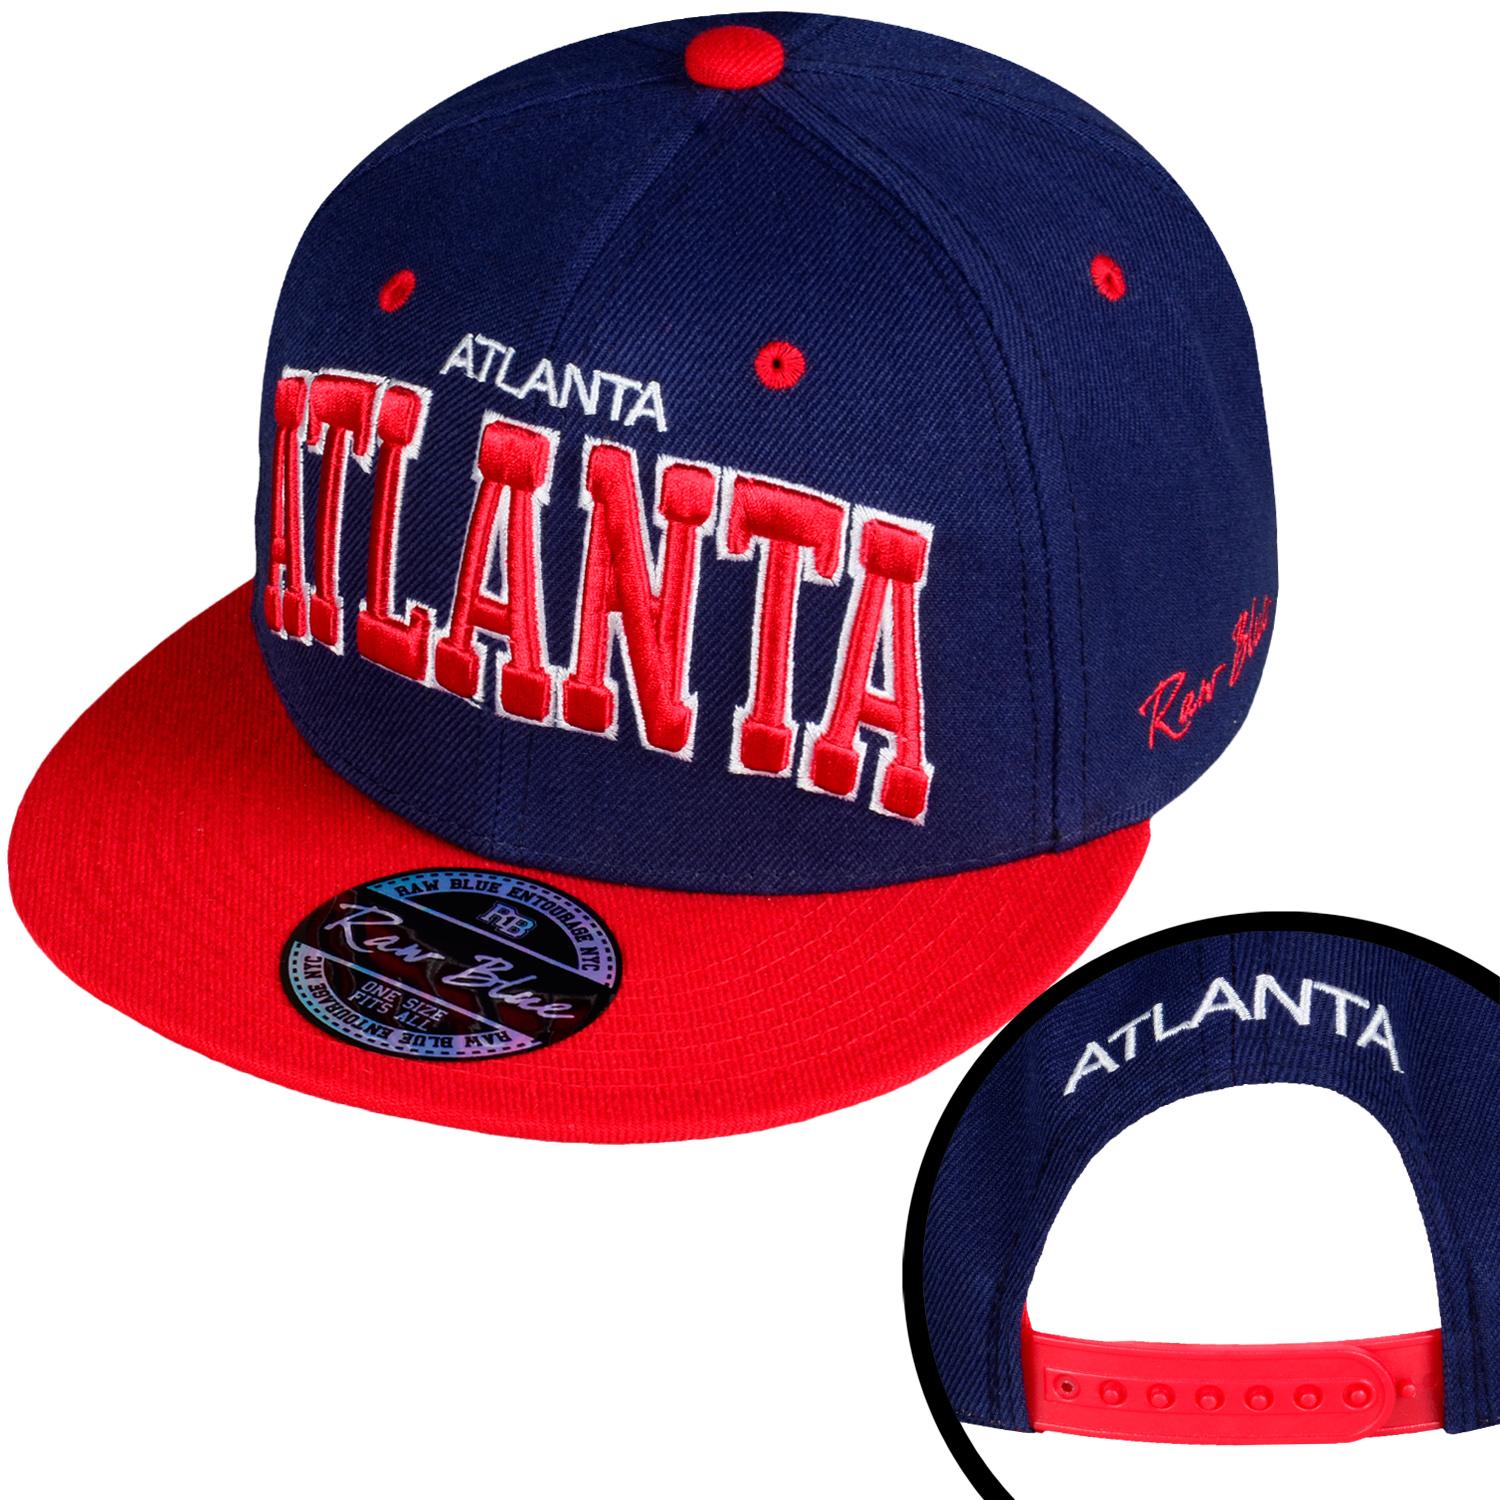 Foto Raw Blue Cityline Atlanta Hombres Snapback Cap De Color Azul Oscuro...